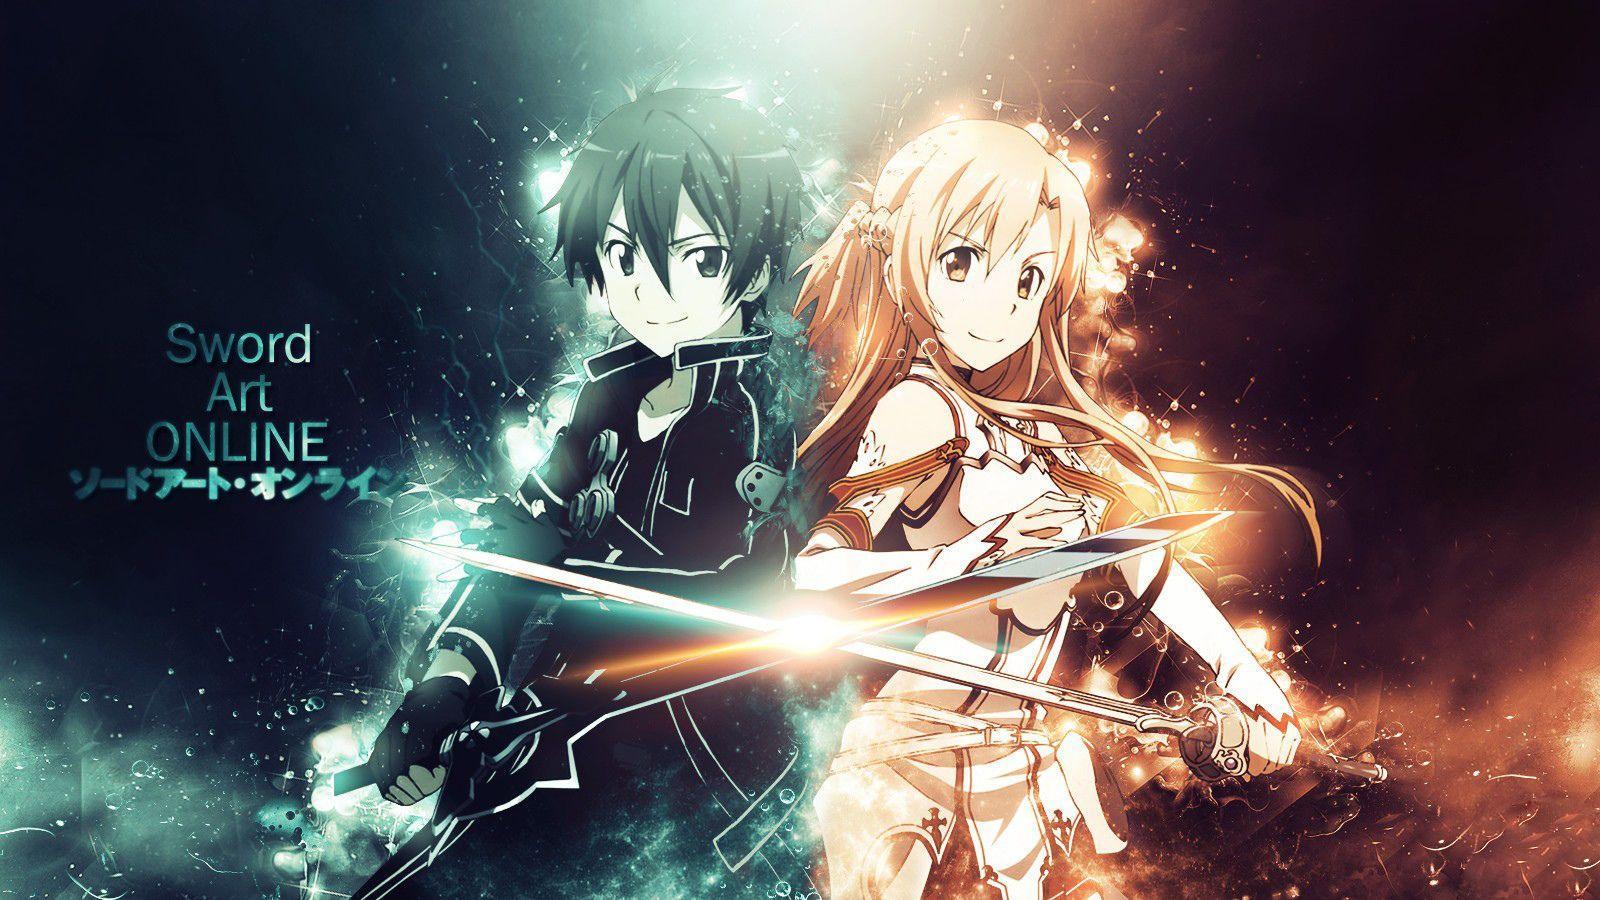 Kirito and Asuna  Sword Art Online wallpaper  Anime wallpapers  33018